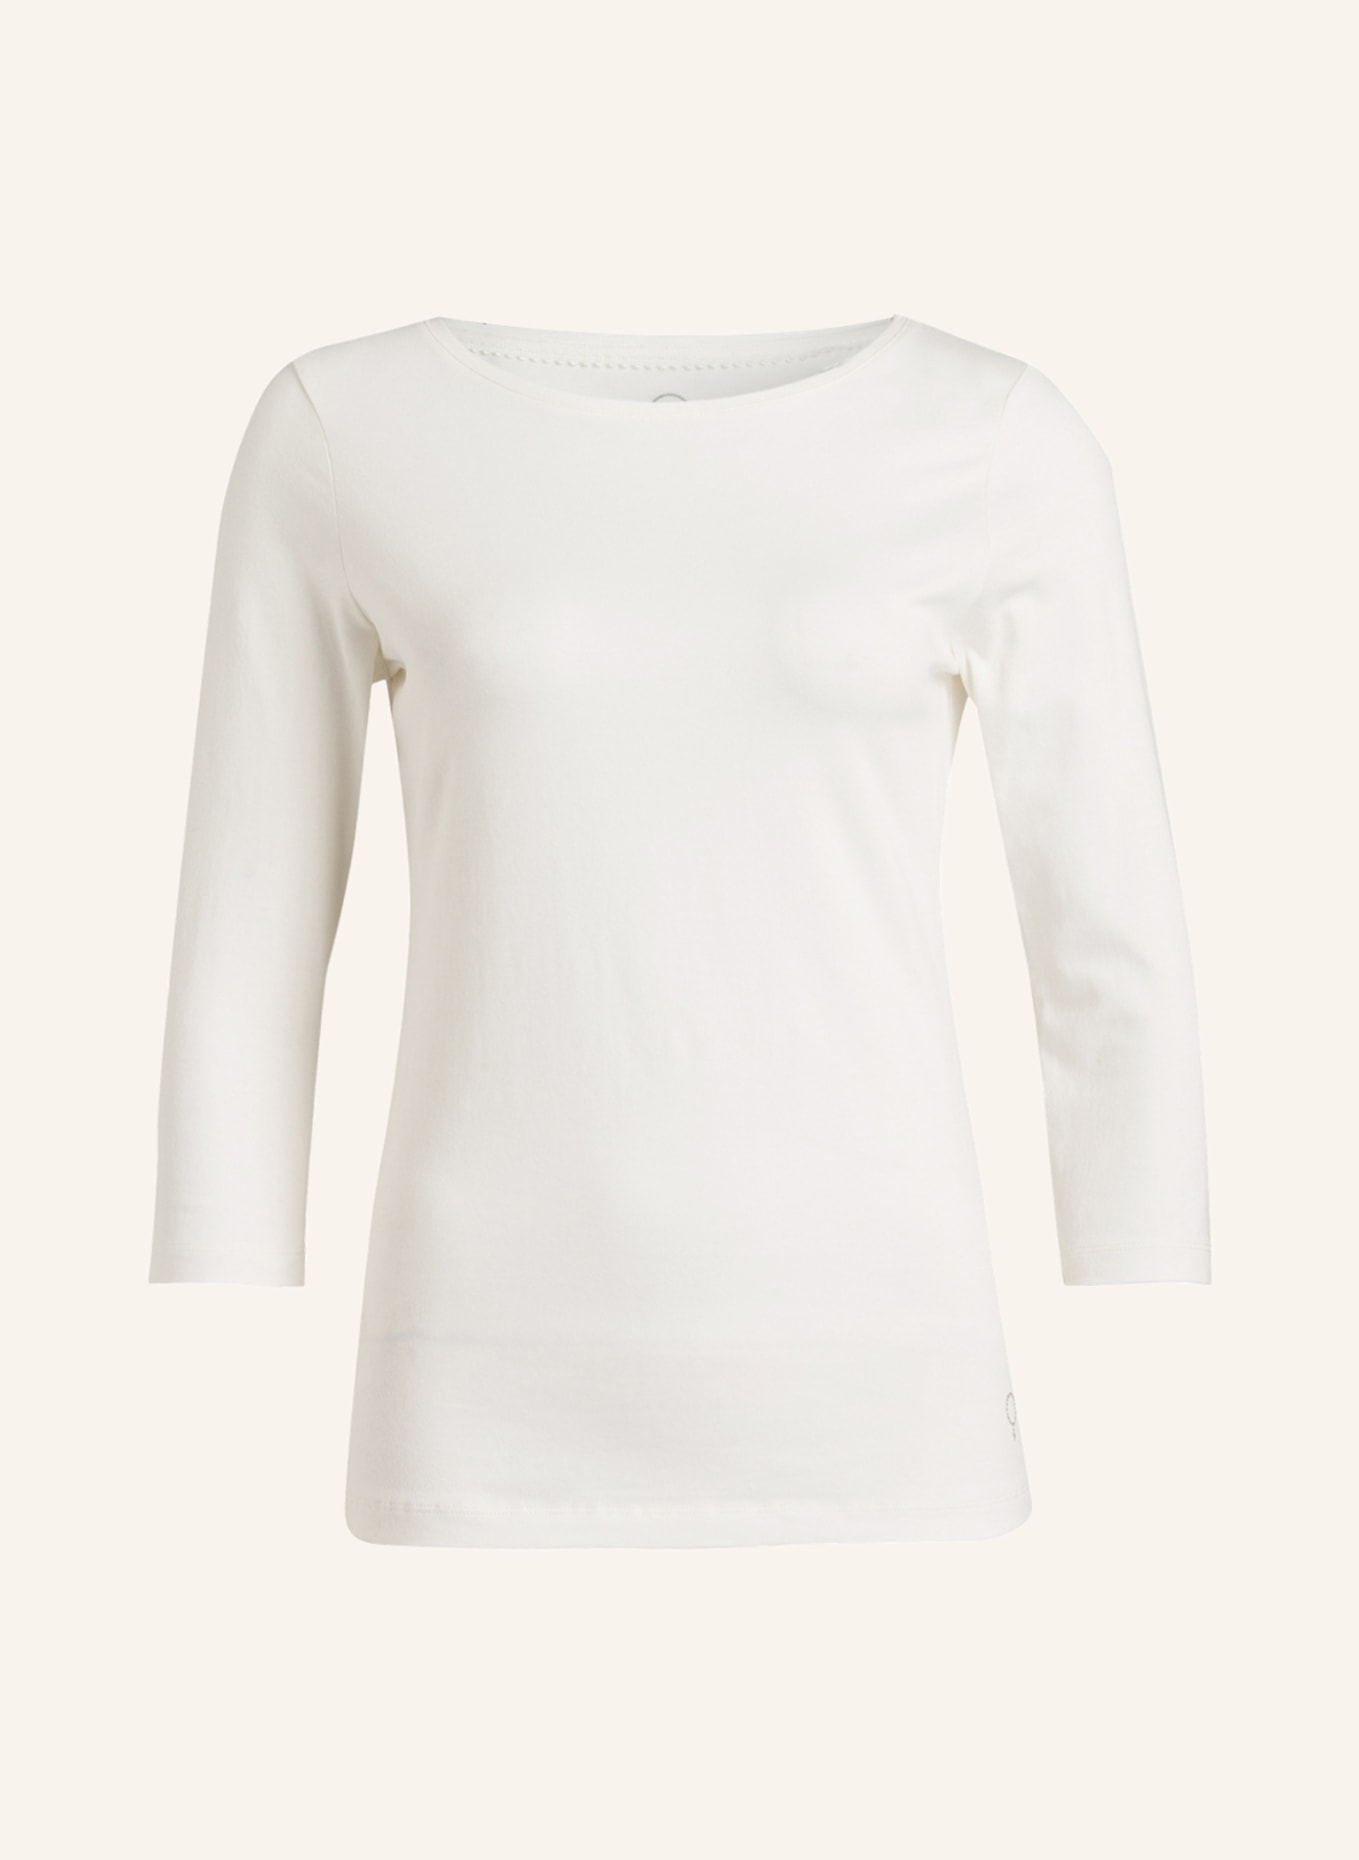 BOVIVA Shirt mit 3/4-Arm, Farbe: CREME (Bild 1)